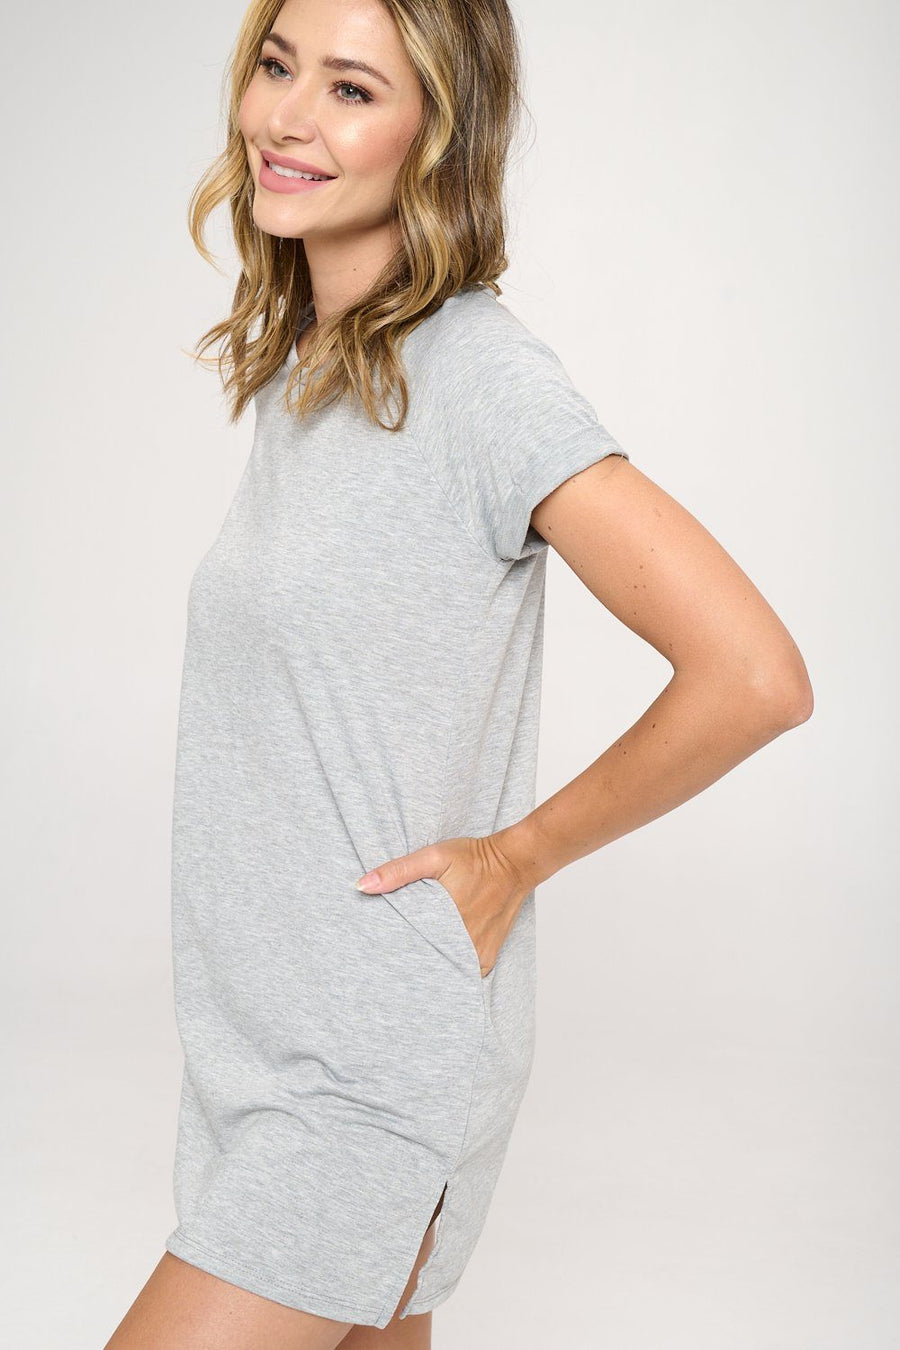 Desi - Heather Grey T-Shirt Dress by EVCR - shopatkonus